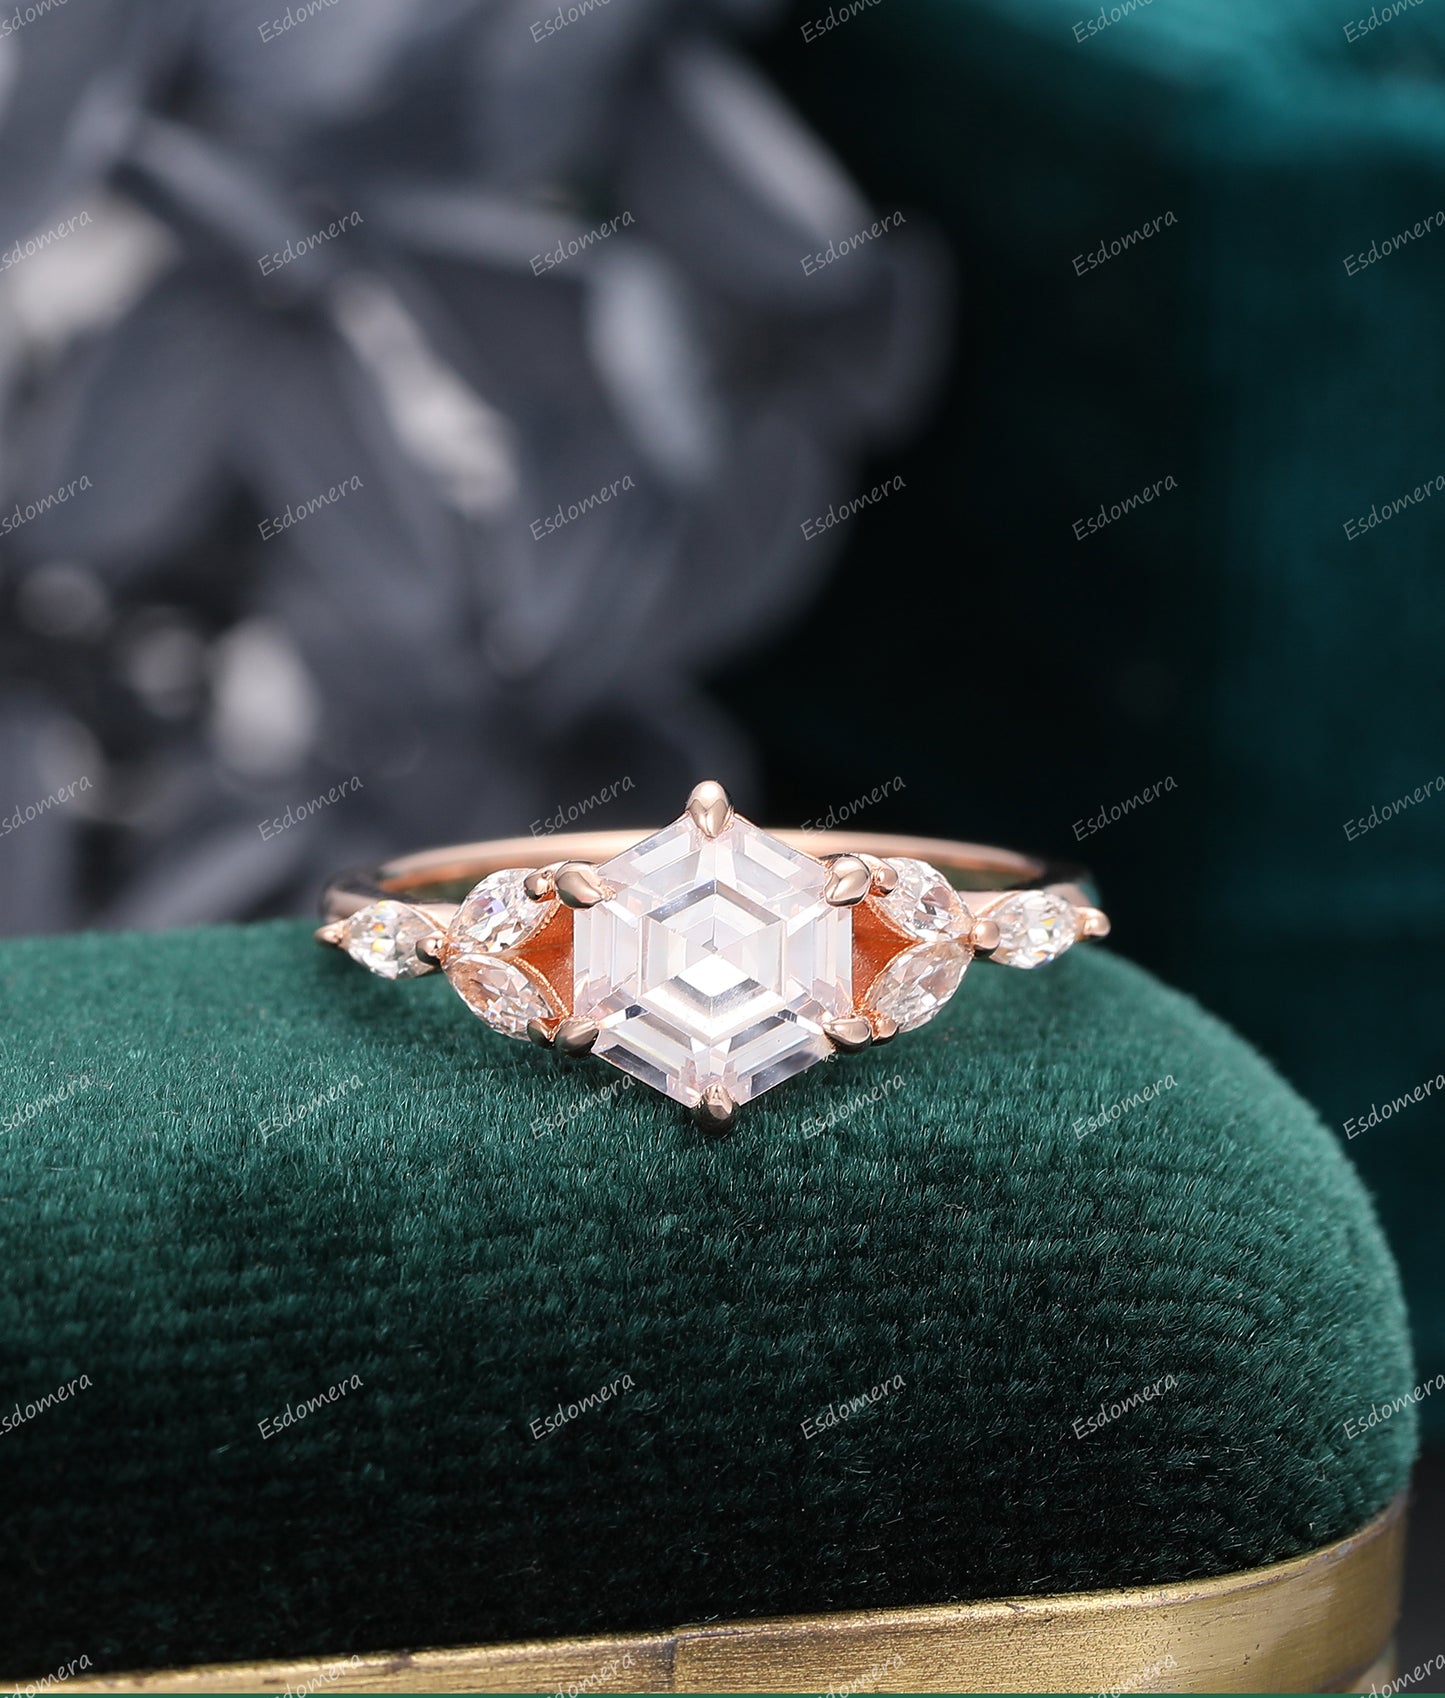 Esdomera 1.35CT Hexagon Moissanite Engagement Ring, 7 Stone Moissanite Ring,14k Rose Gold Cluster Ring, Anniversary Promise Ring For Her